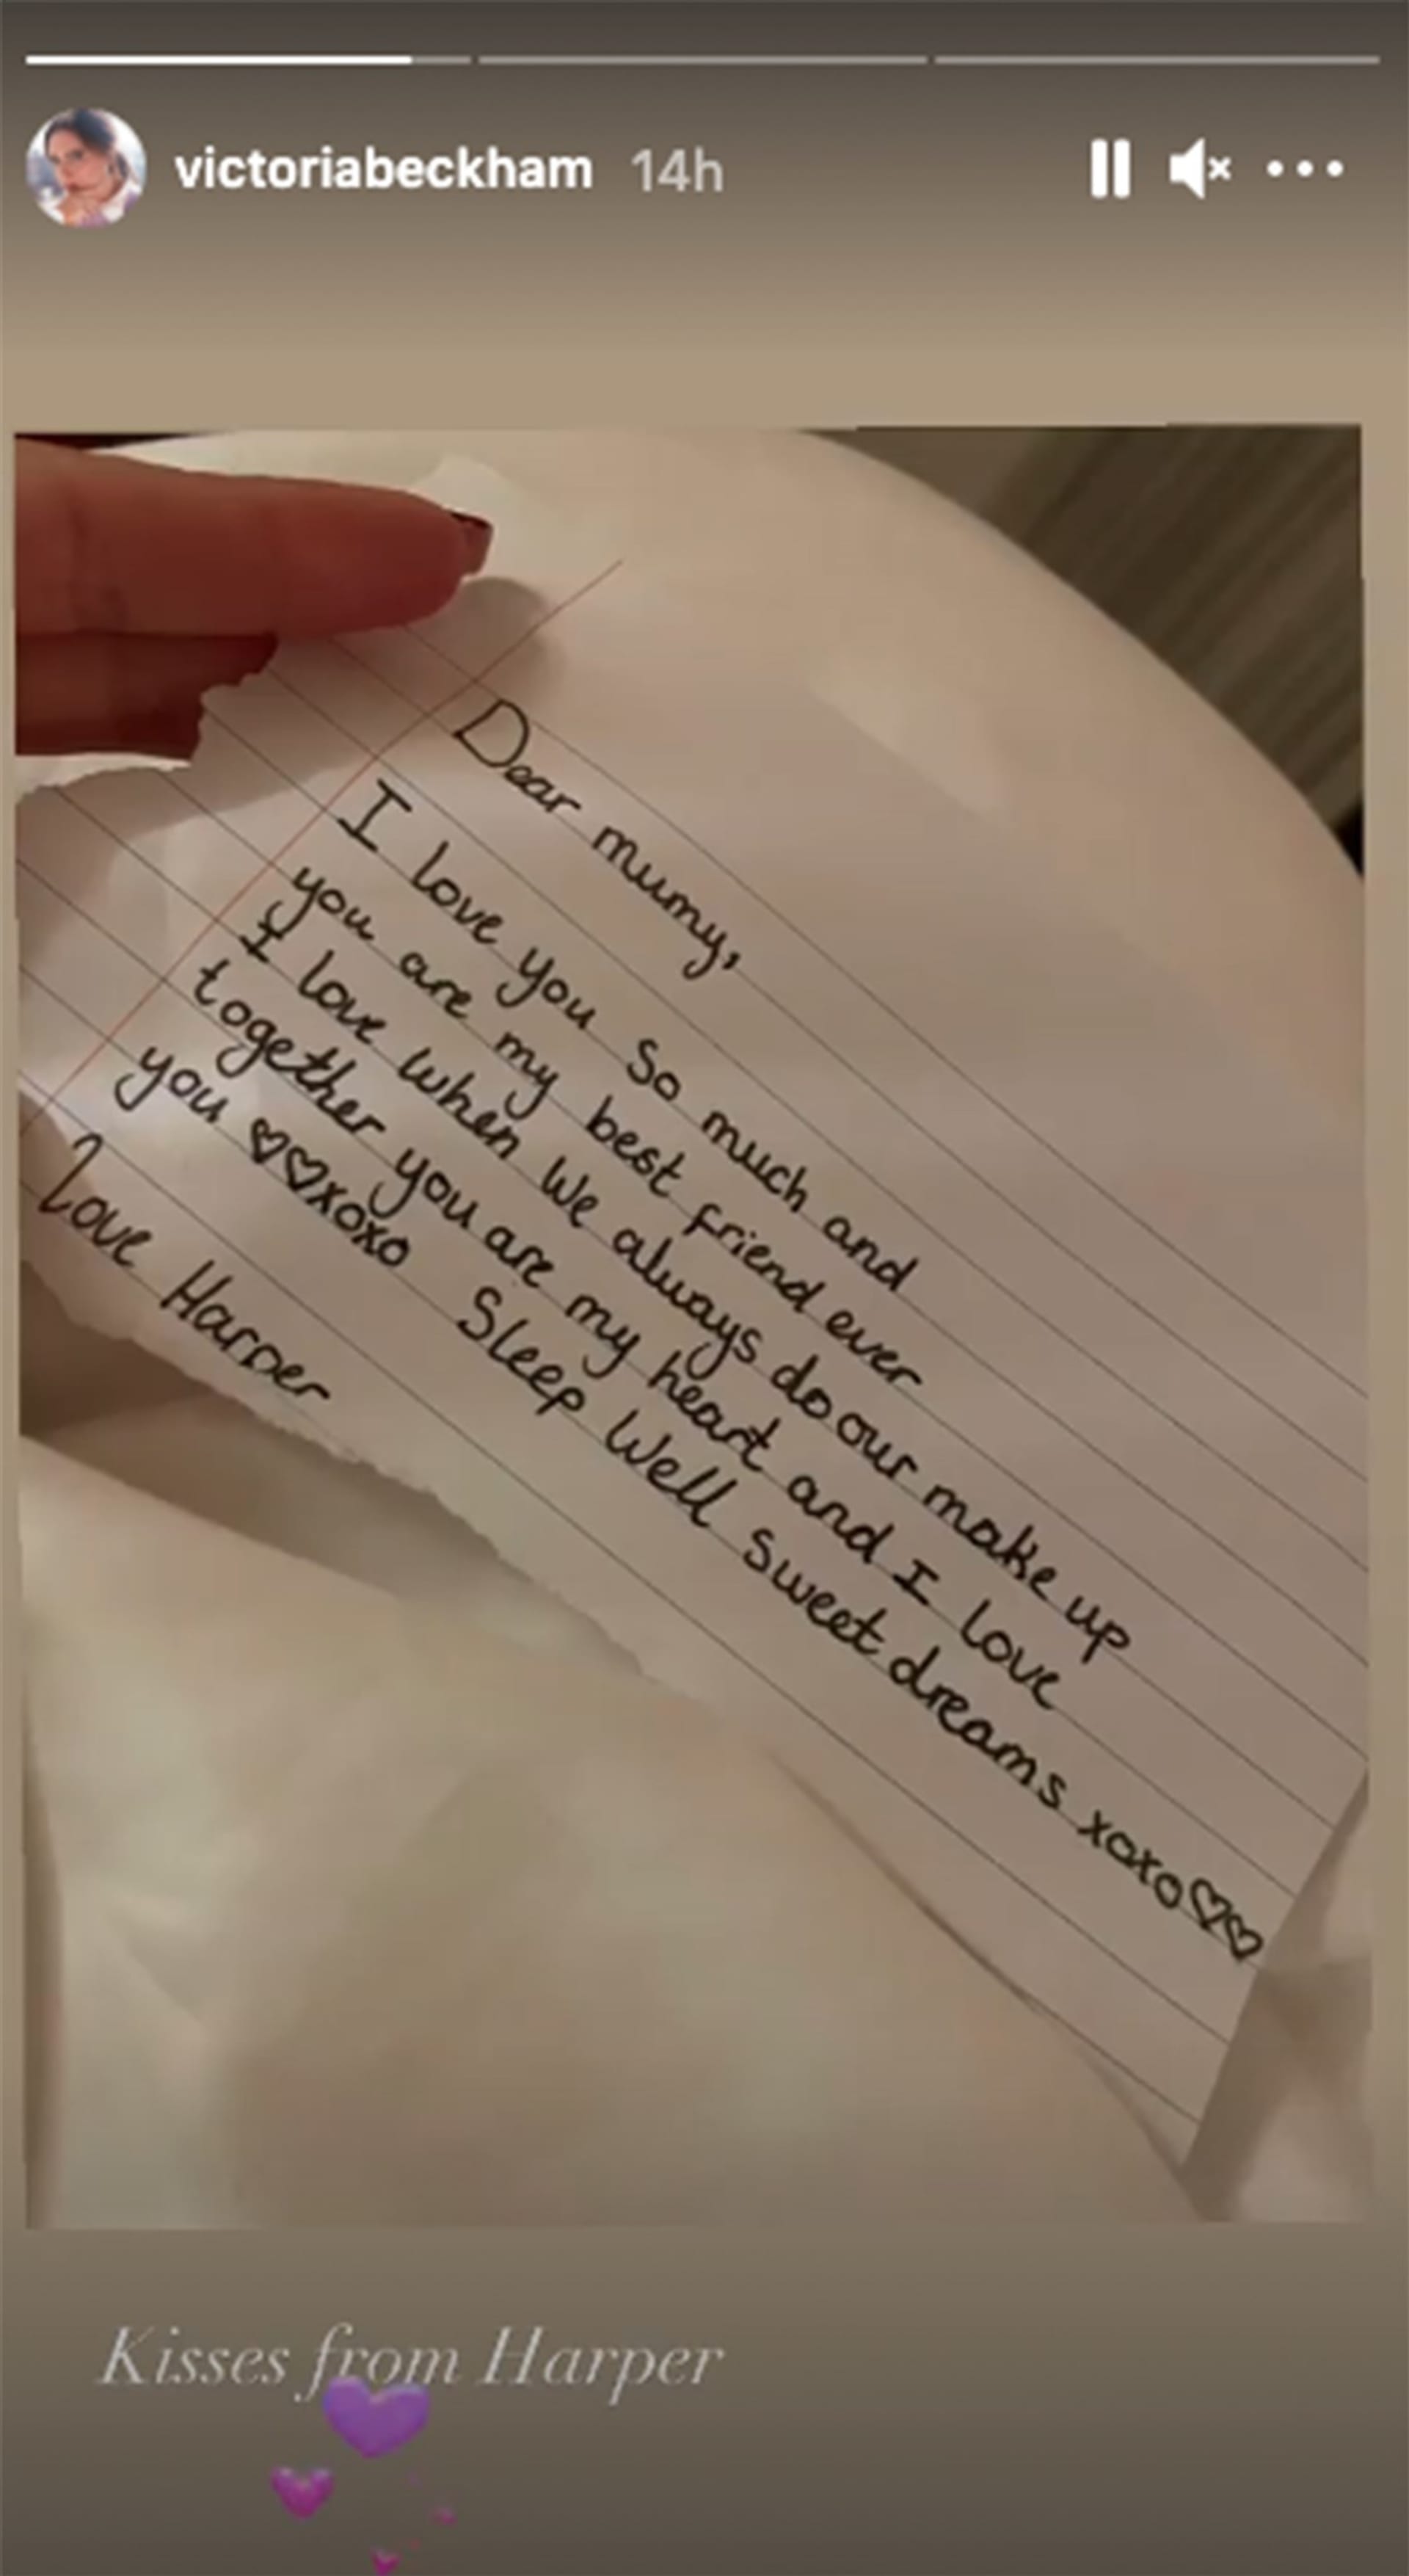 Jeden dopis napsala mamince Victorii Beckham.